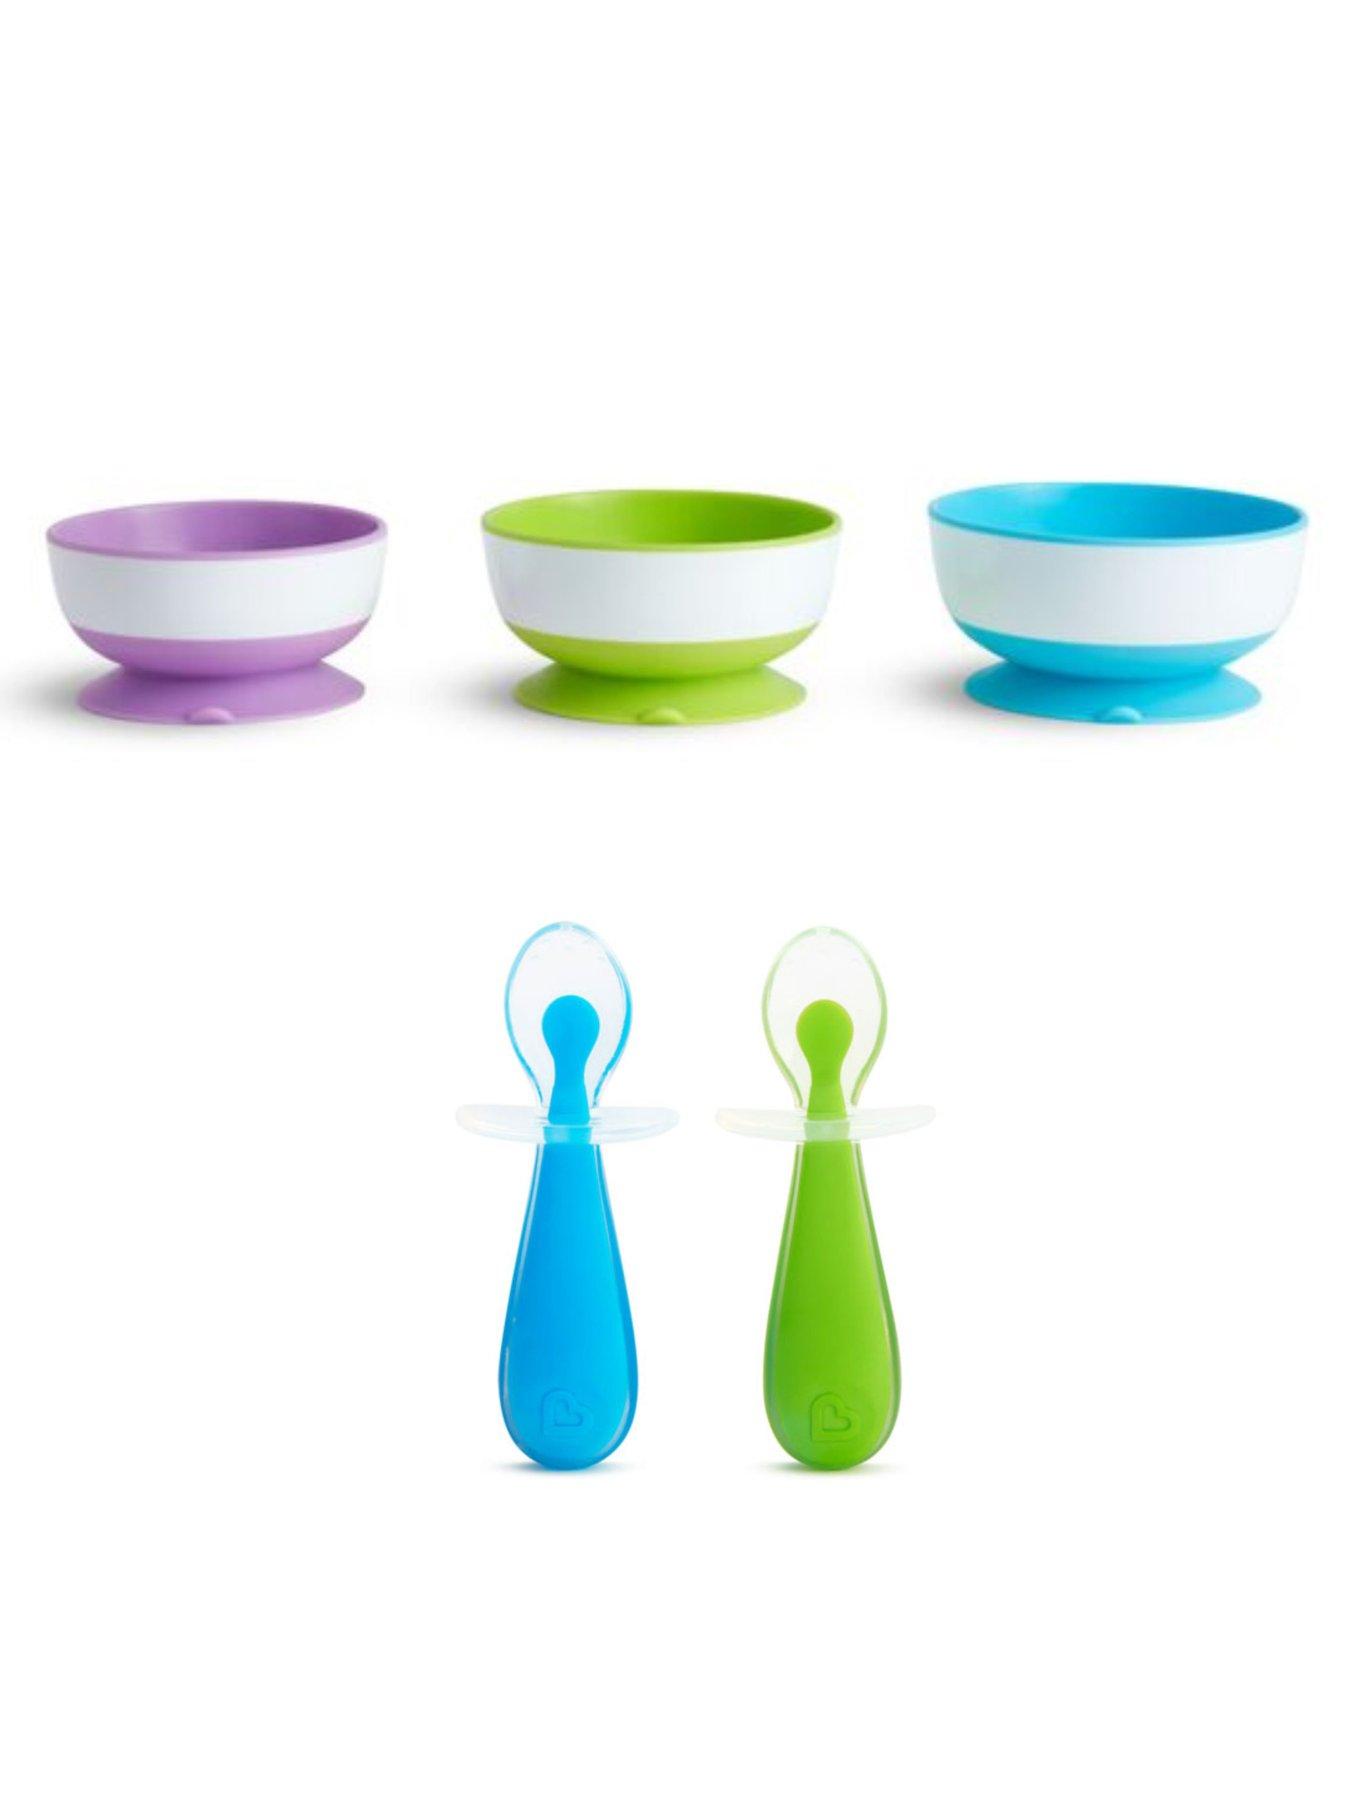 Munchkin Soft Tip Infant Spoon set, Multi color, 6 pack - Assorted Pre